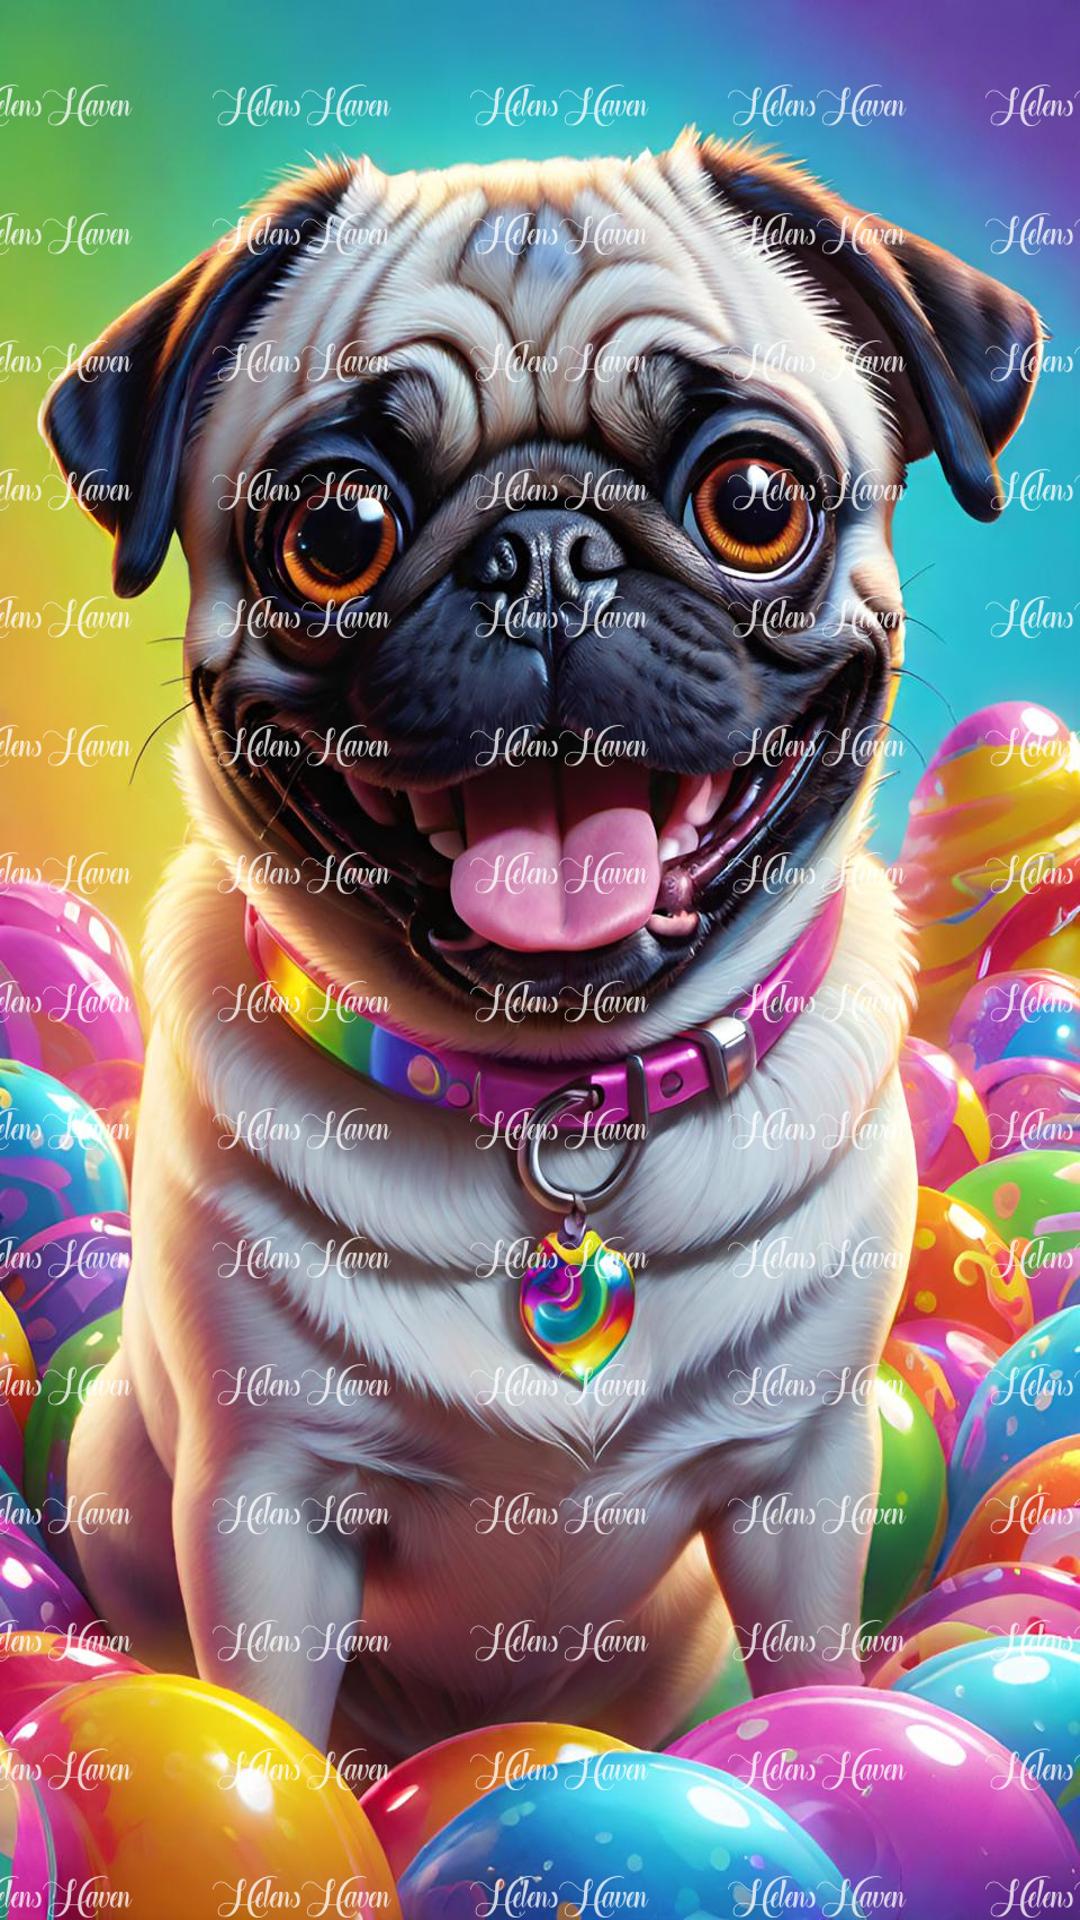 Pugdog playing in colourful balls